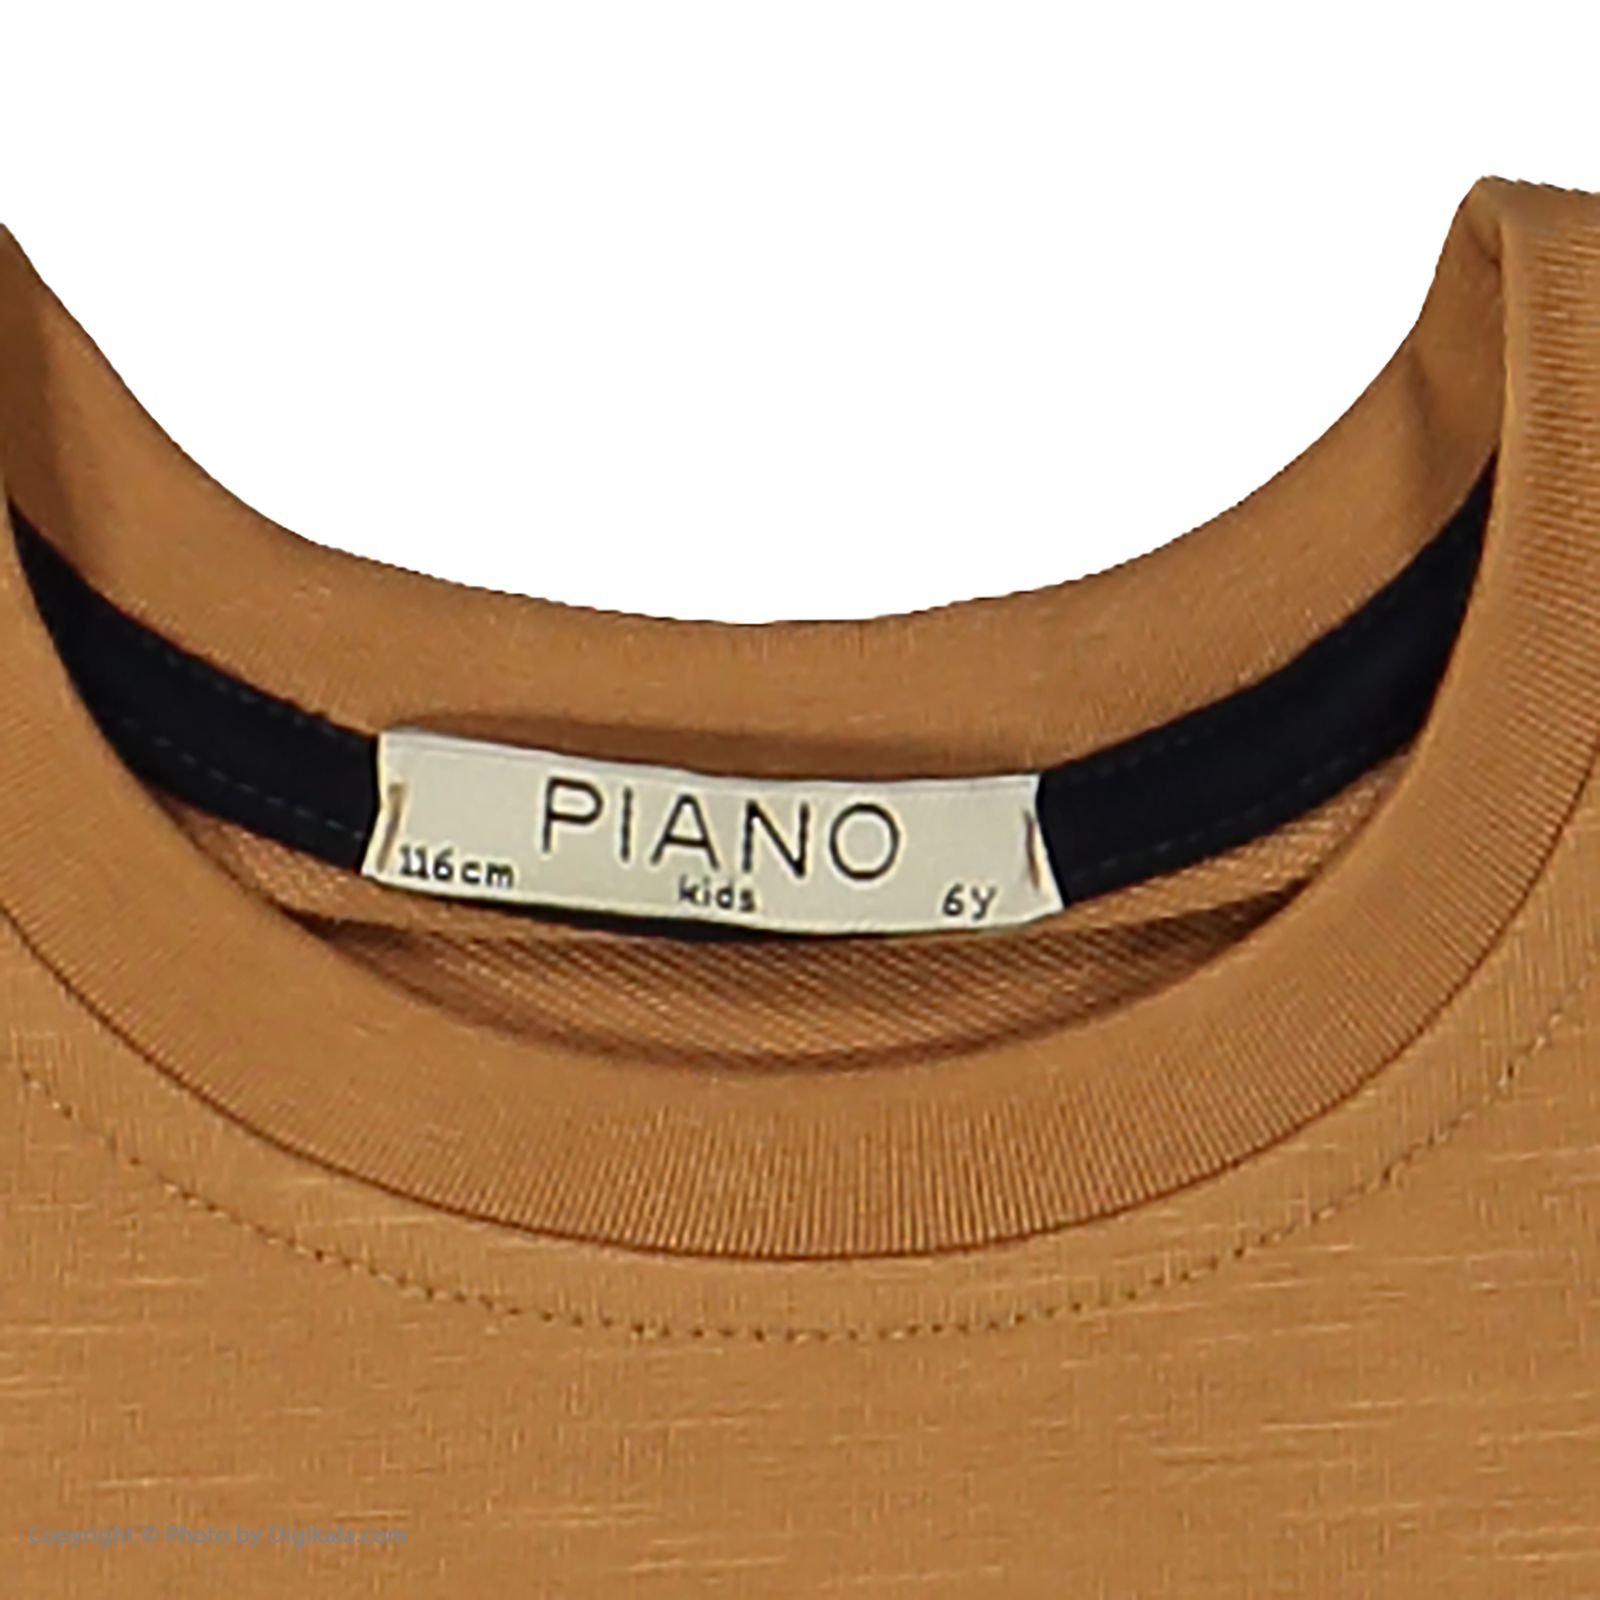 تی شرت پسرانه پیانو مدل 1009009901729-73 -  - 5